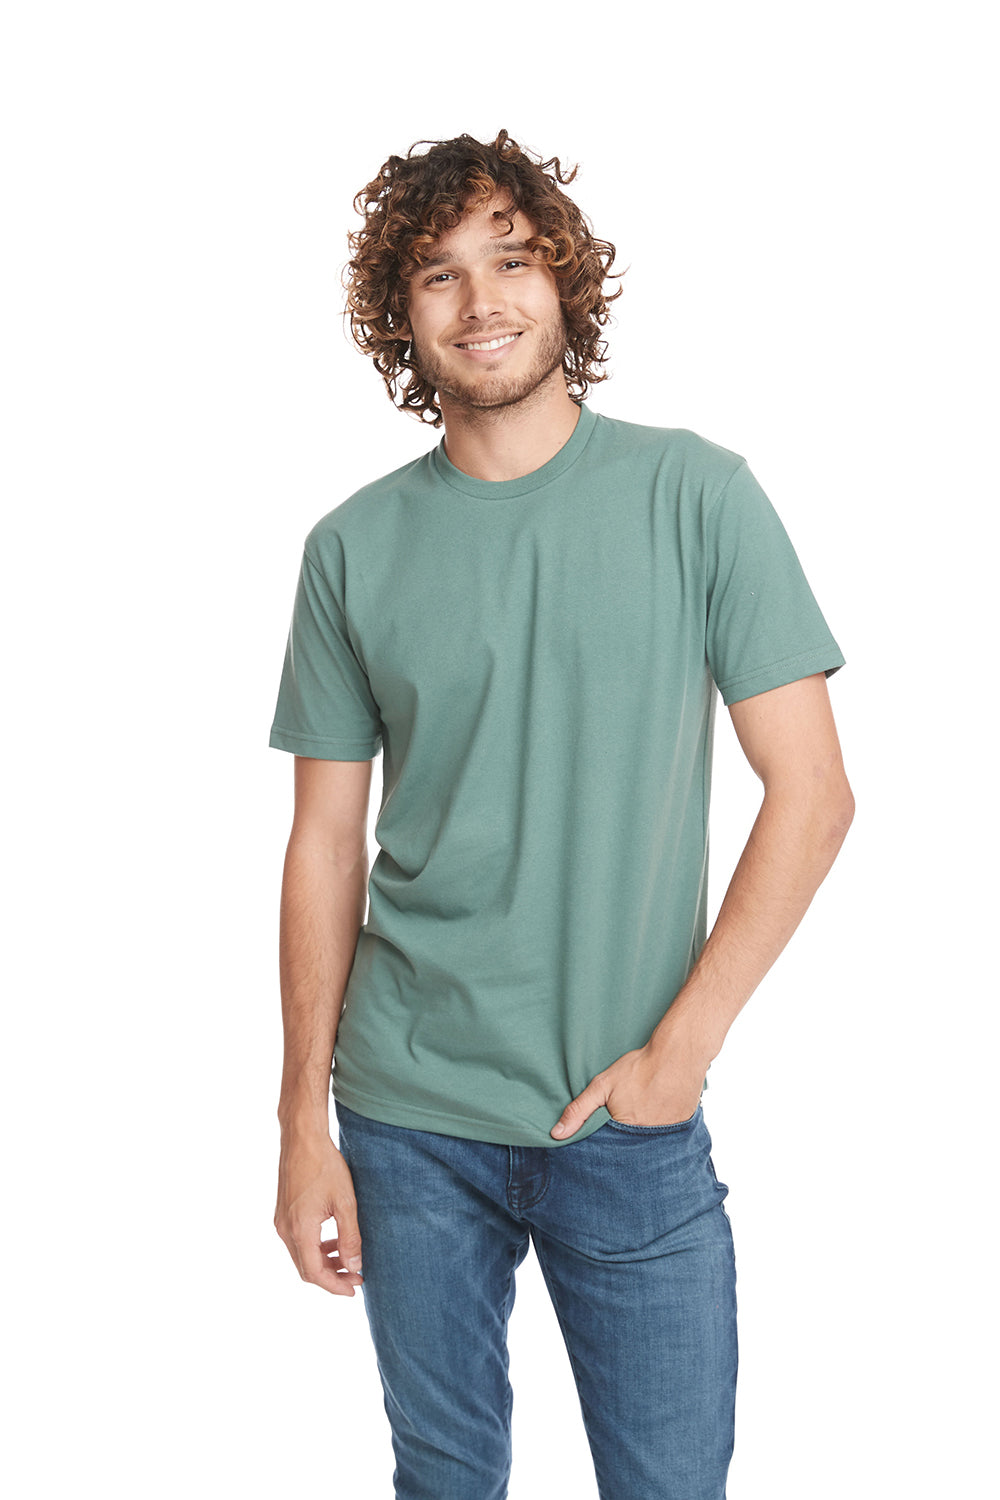 Next Level 4210 Eco Performance Short Sleeve Crewneck T-Shirt Pine Green Front